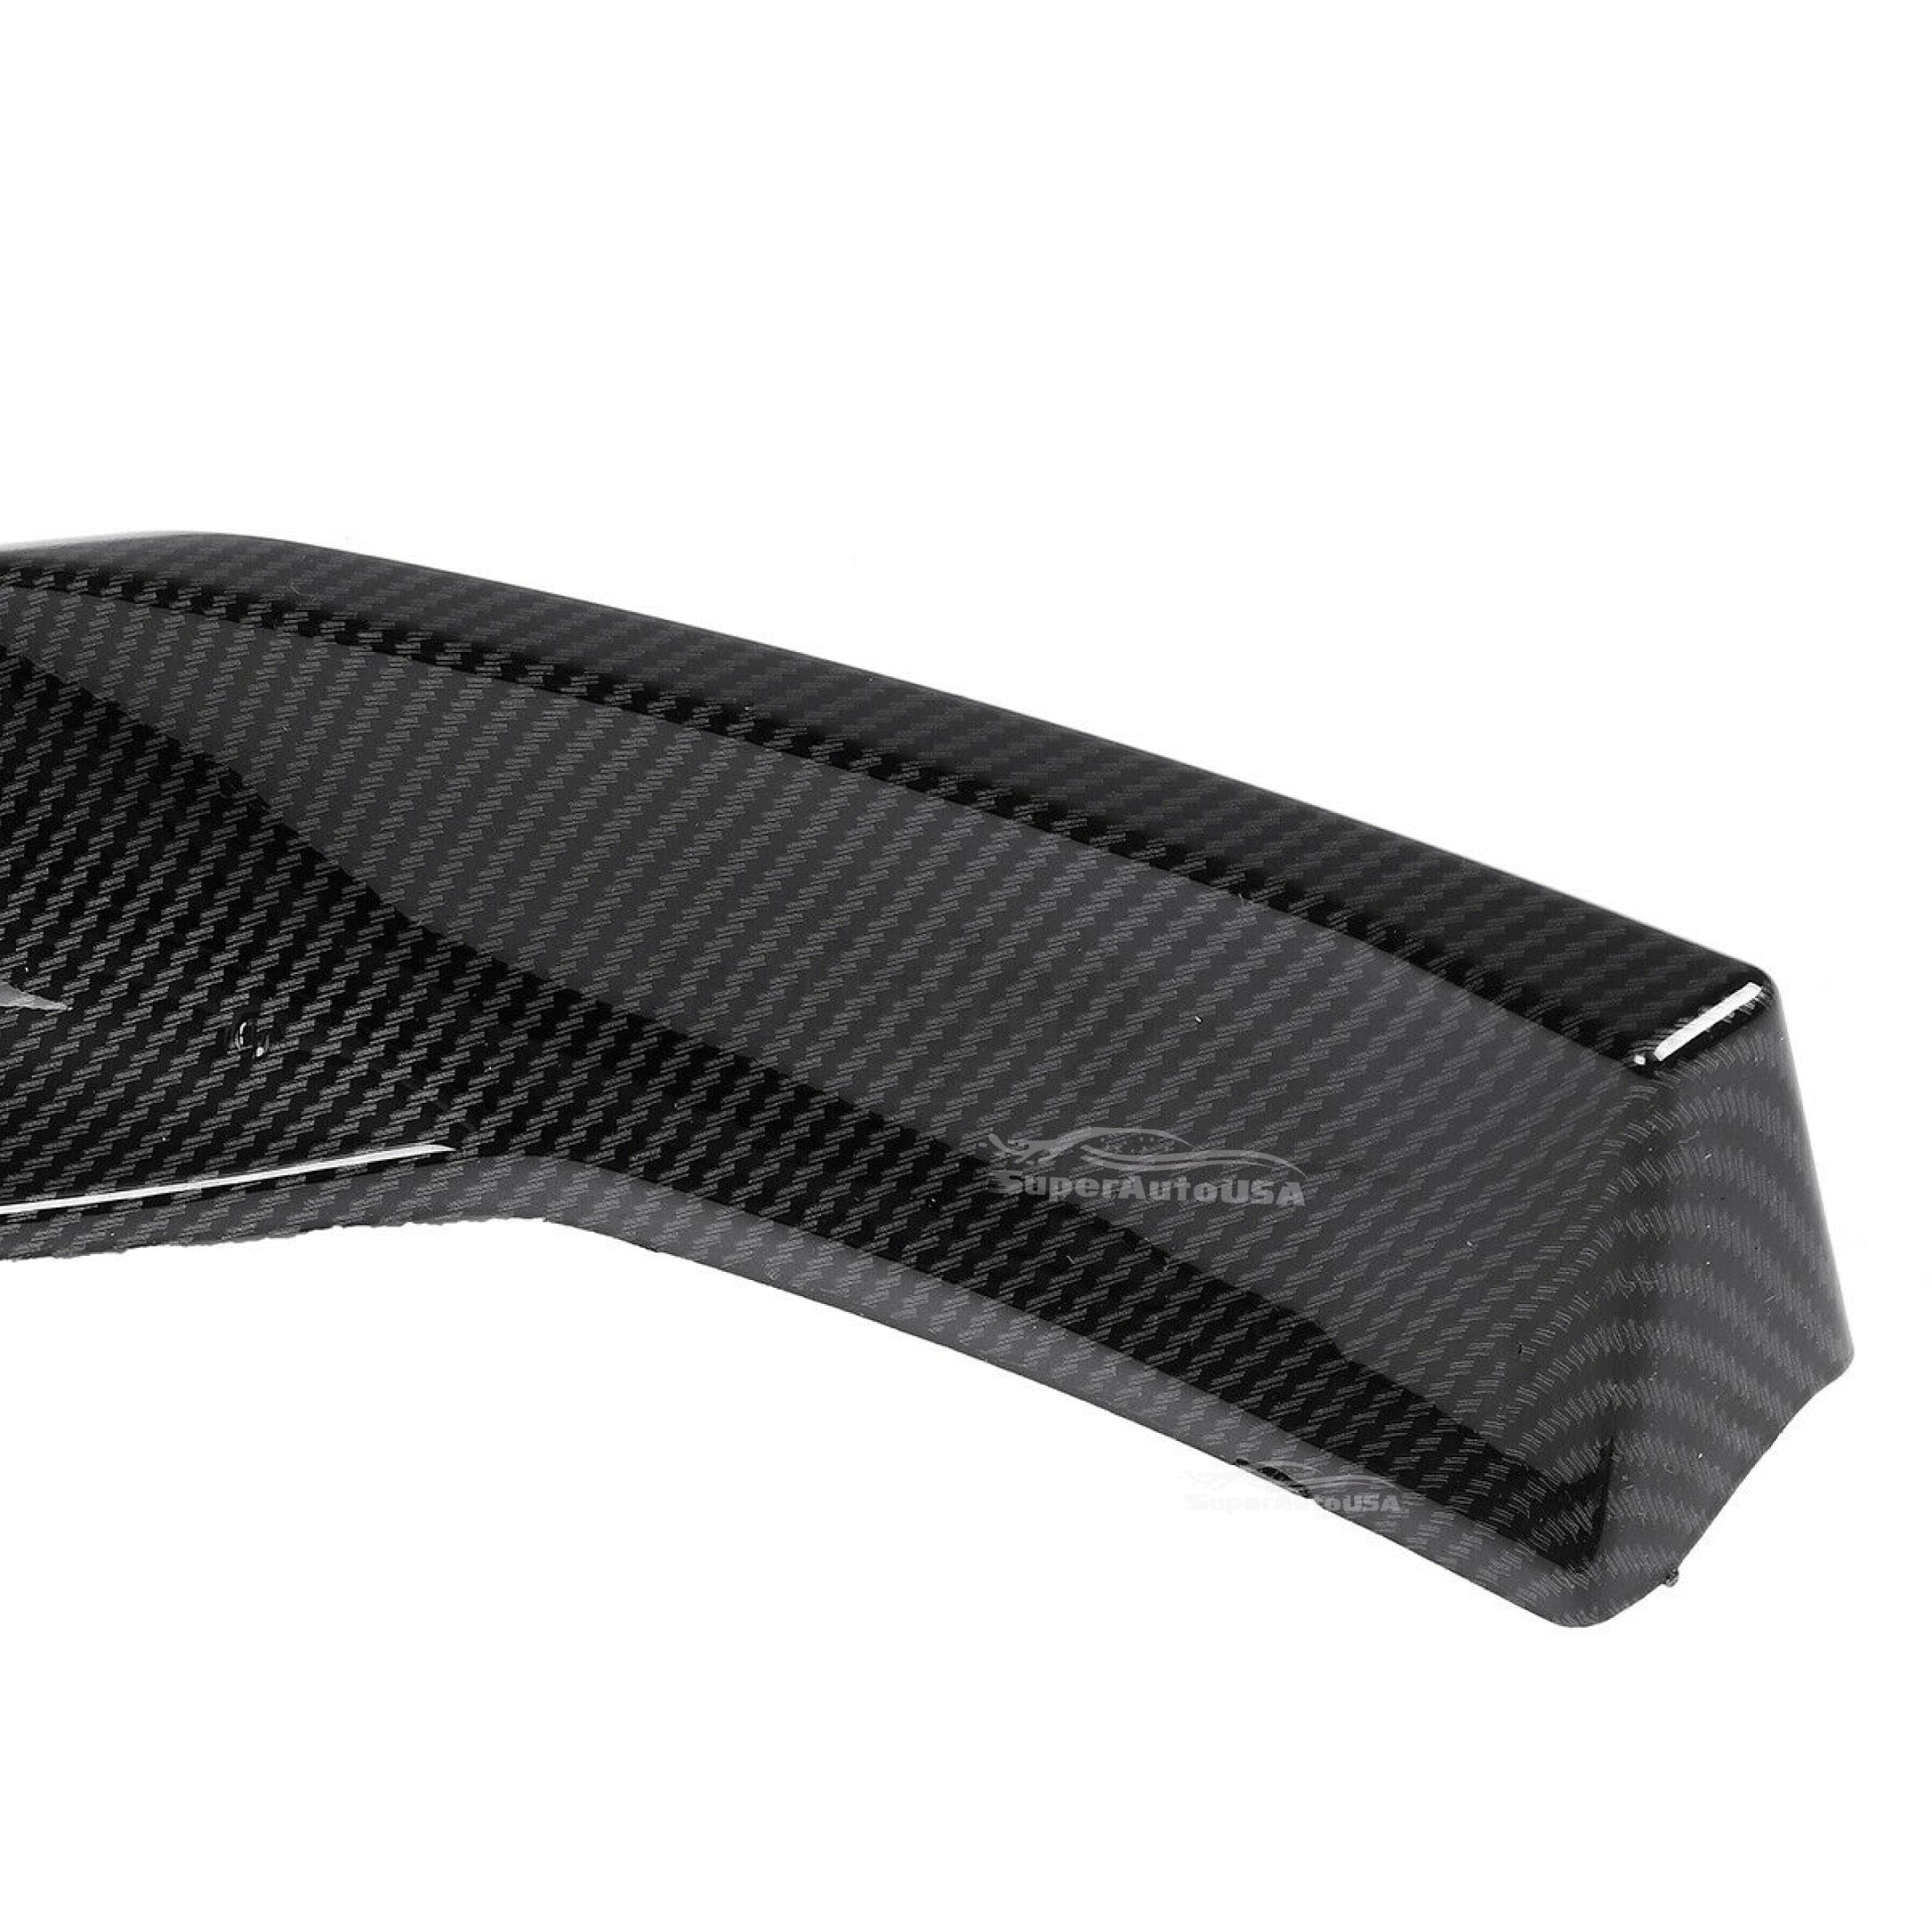 Para BMW G30 5 Series M Sport 2021-2022, separador de labios de parachoques delantero (impresión de fibra de carbono) - 0